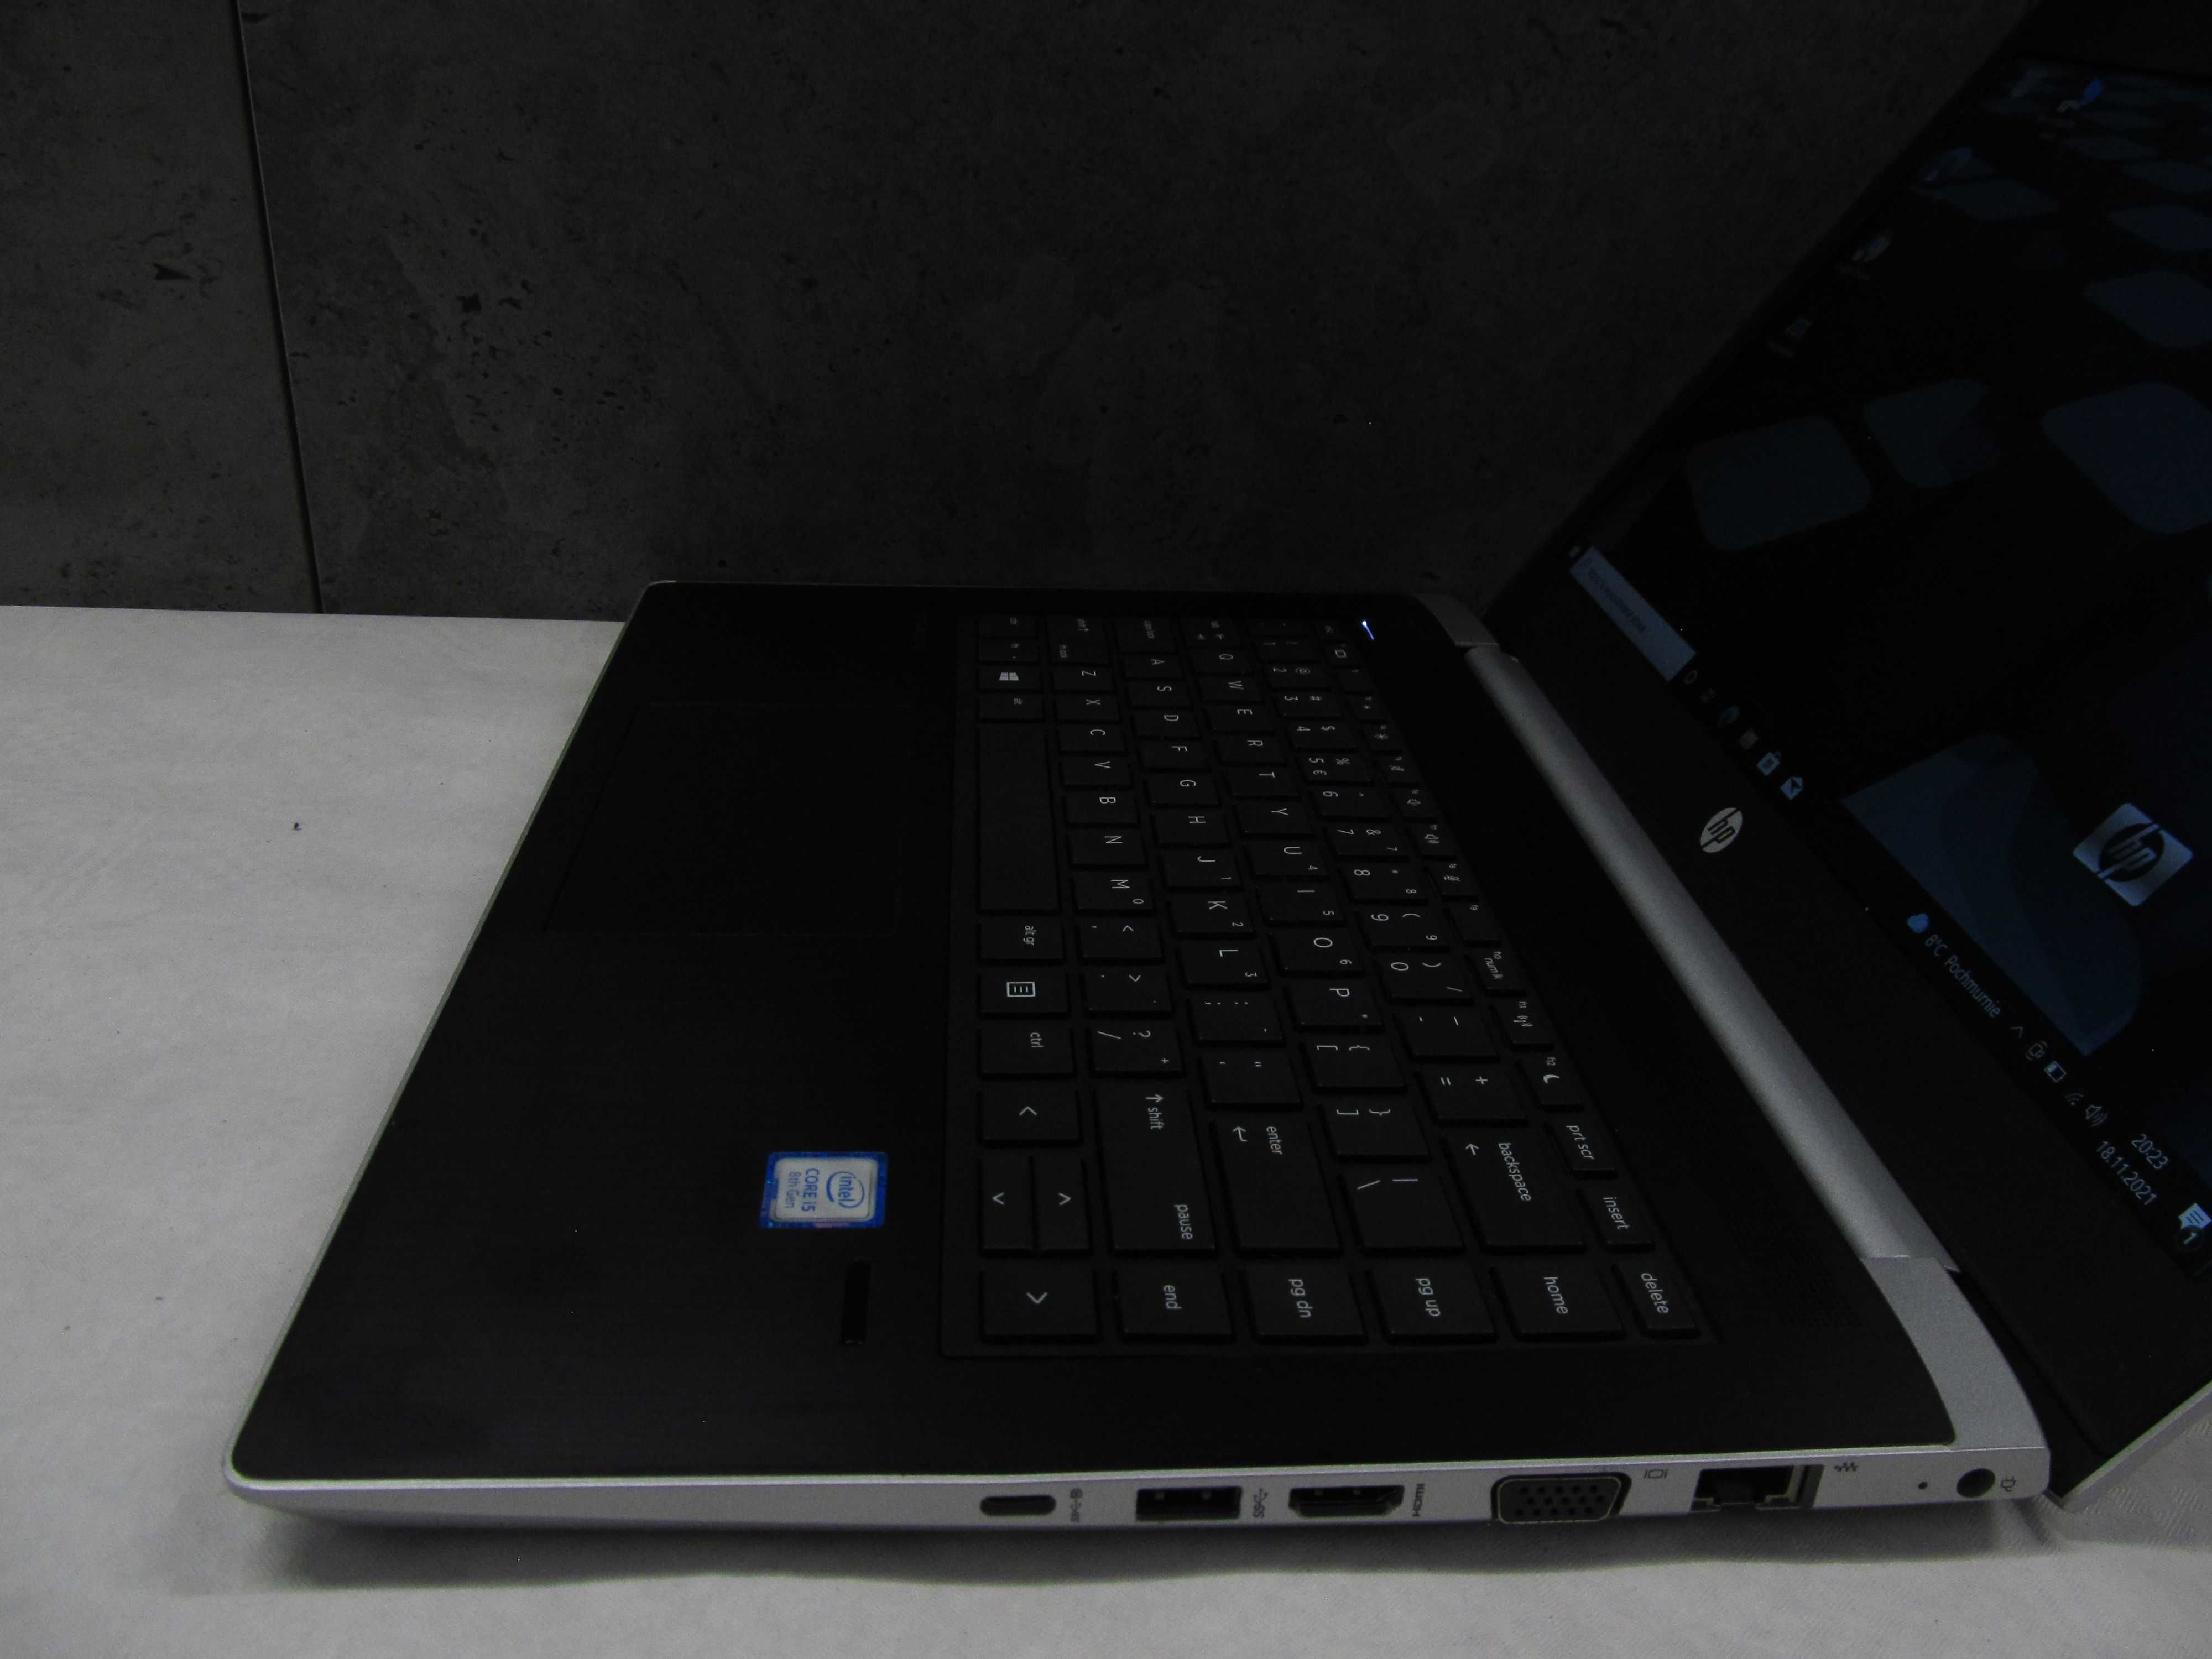 Cienki Laptop HP ProBook 440 G5 i5 8250U 8GB dysk 500 + 128SSD  FHD